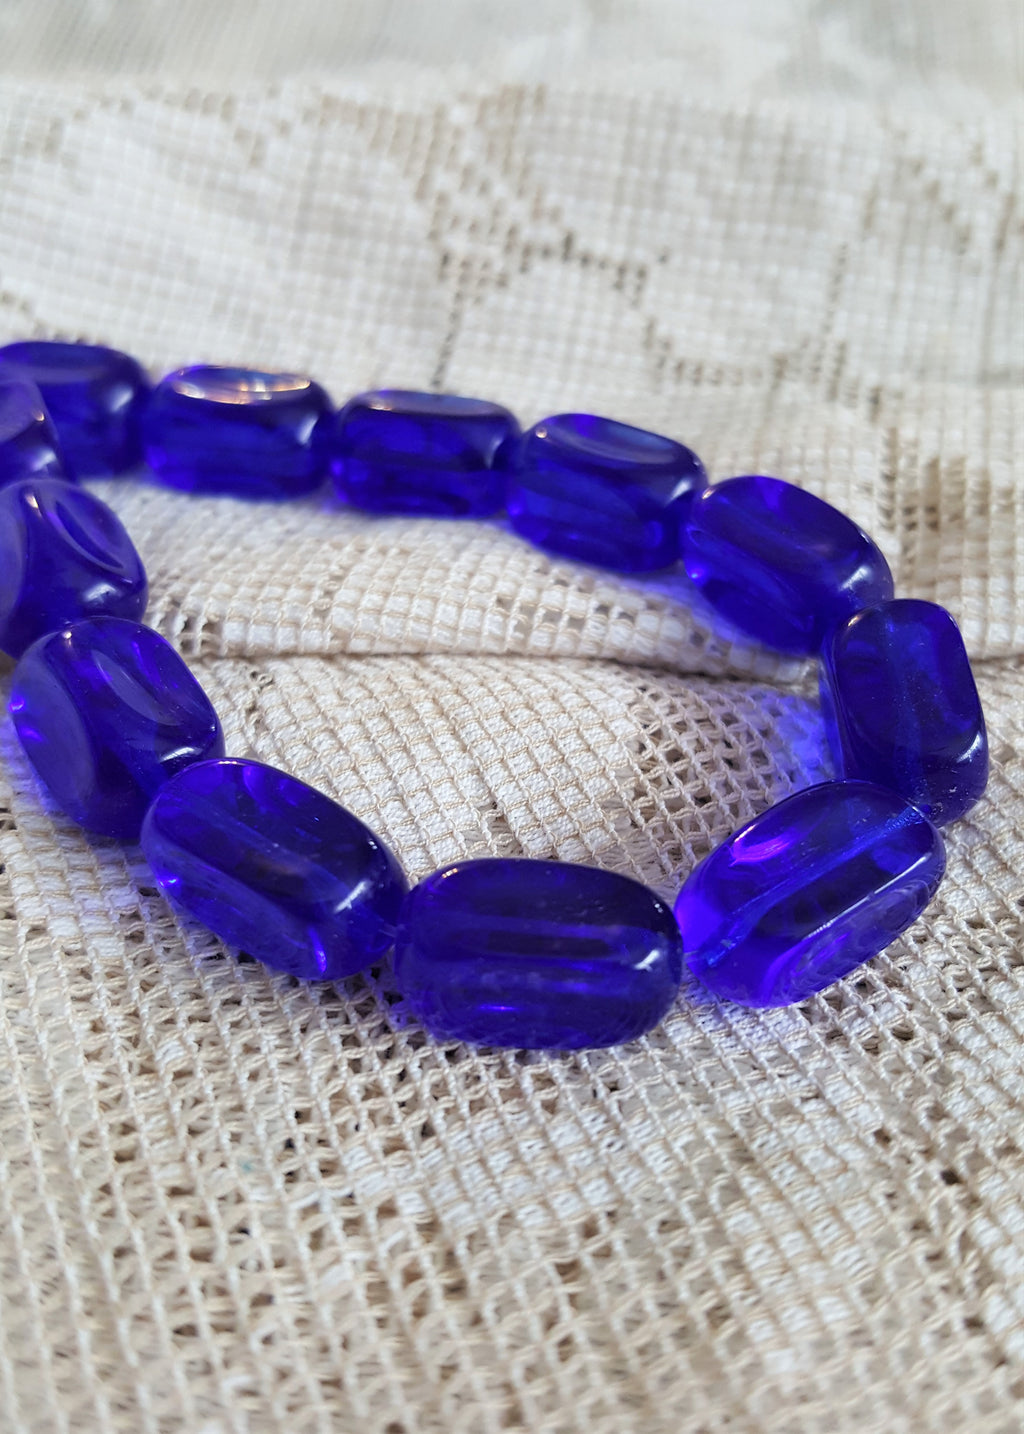 Beautiful Cobalt Blue Glass beads from the Czech Republic Transparent chunky shape 14mm